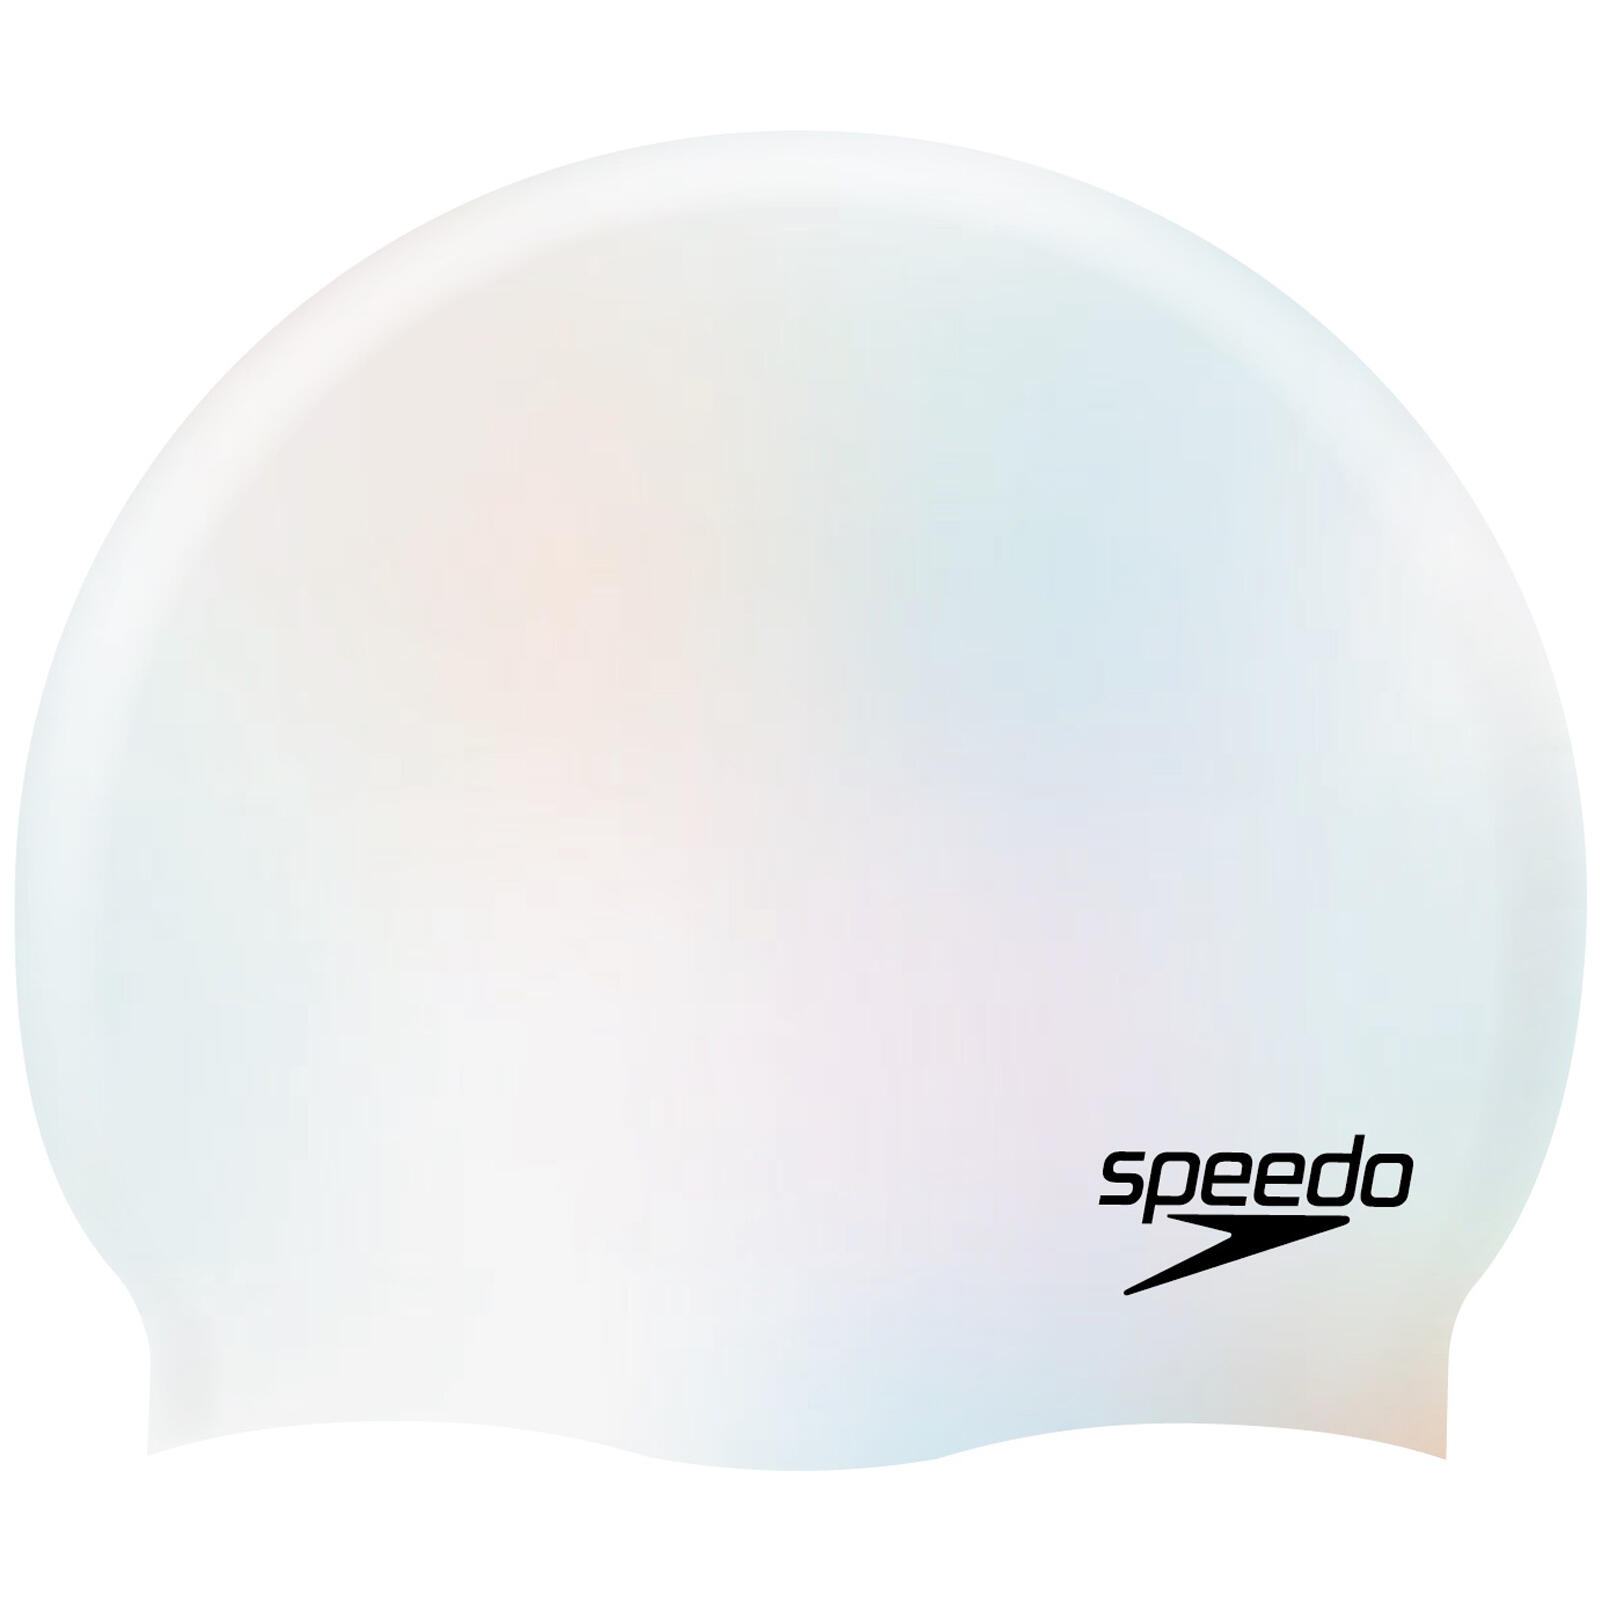 SPEEDO Speedo Plain Moulded Silicone Cap